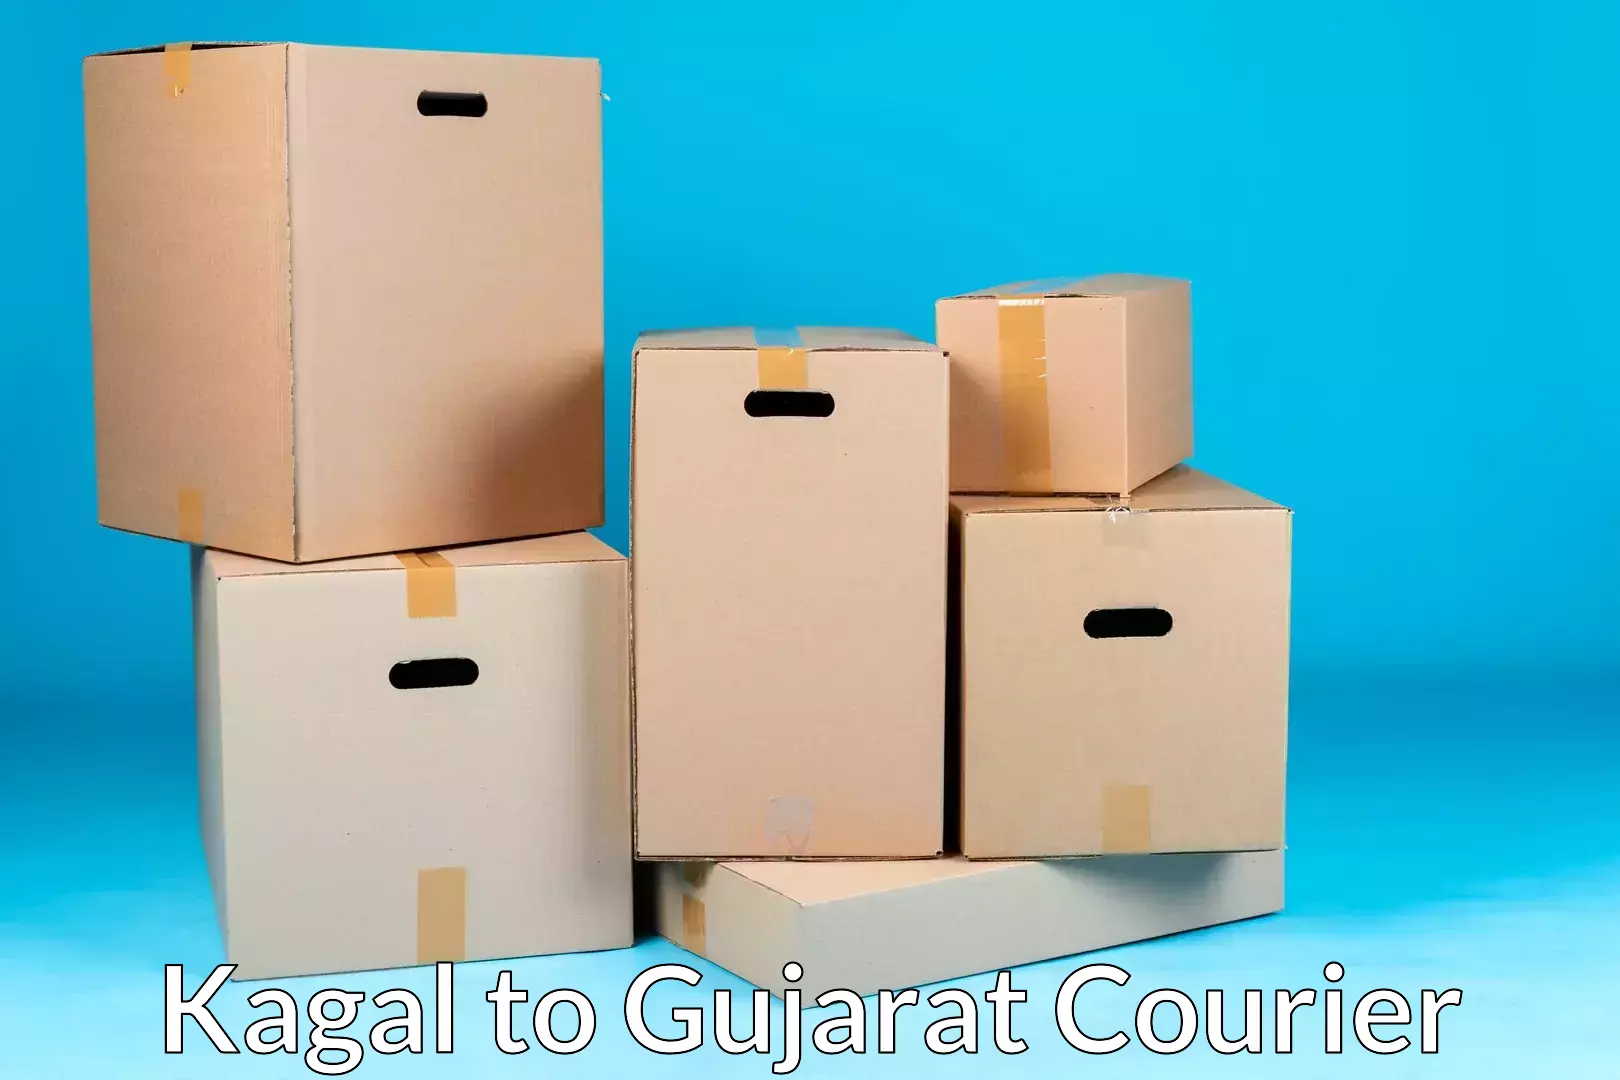 Professional moving company Kagal to Gujarat